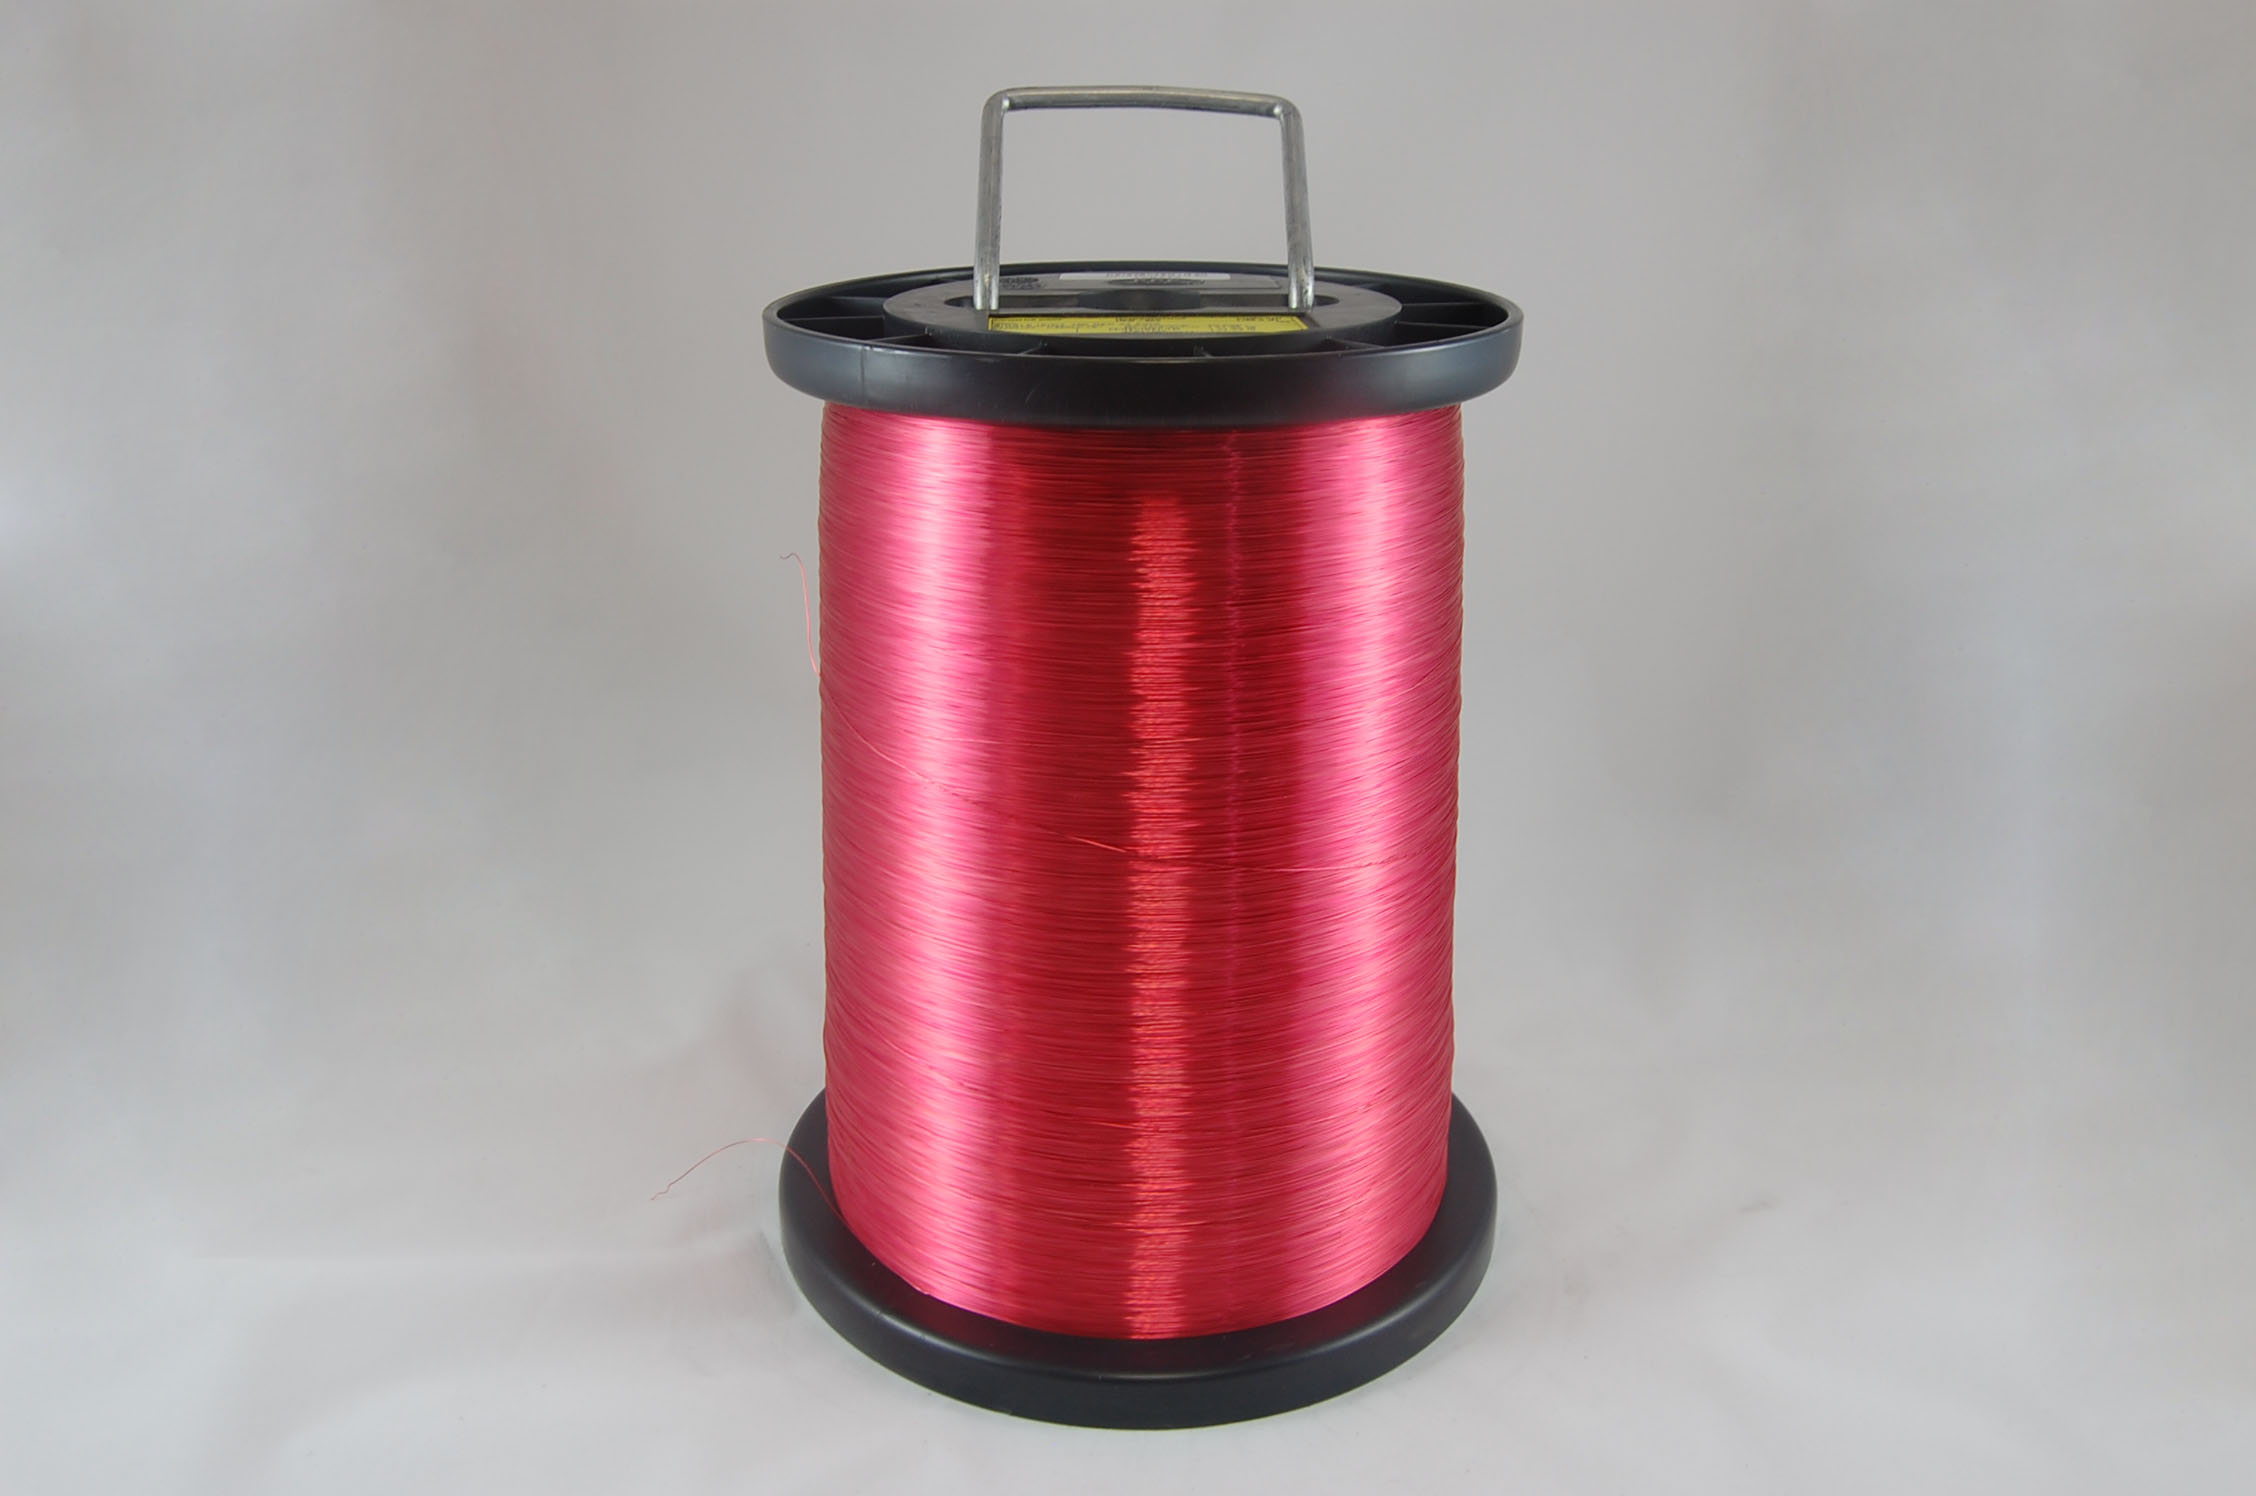 #17.5 Heavy INVEMID 200 Round MW 35 Copper Magnet Wire 200°C, copper, 45 LB half pack pail (average wght.)